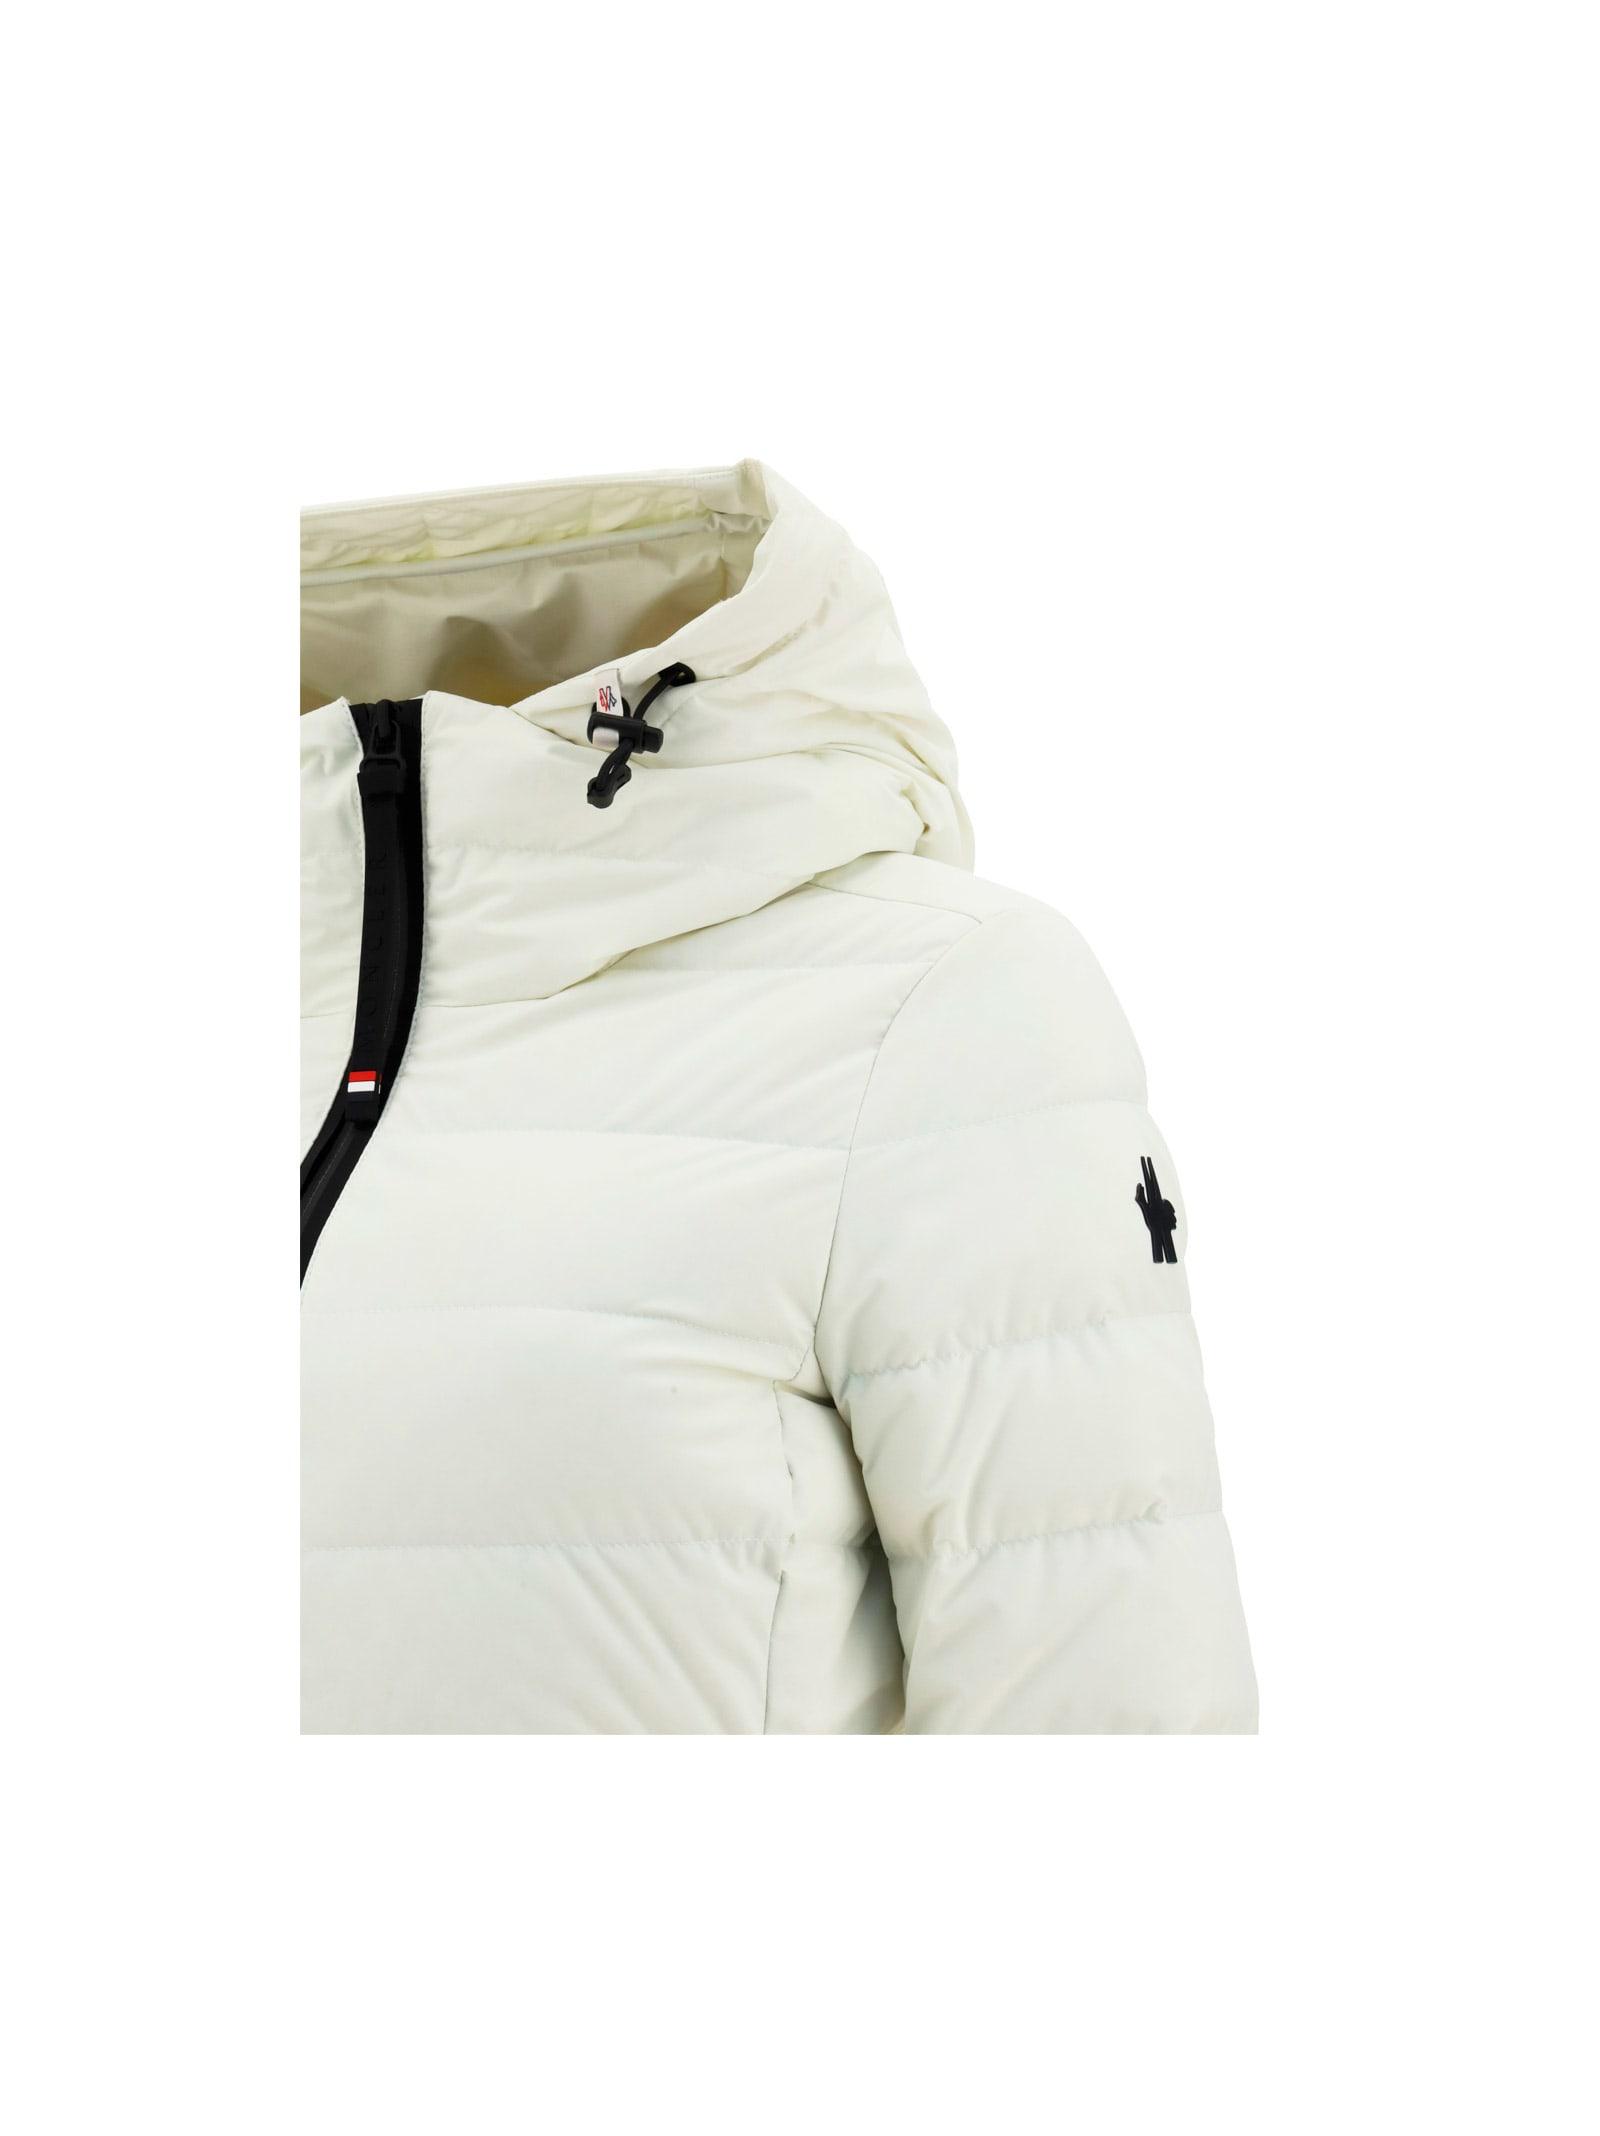 3 MONCLER GRENOBLE Chessel Jacket in White | Lyst